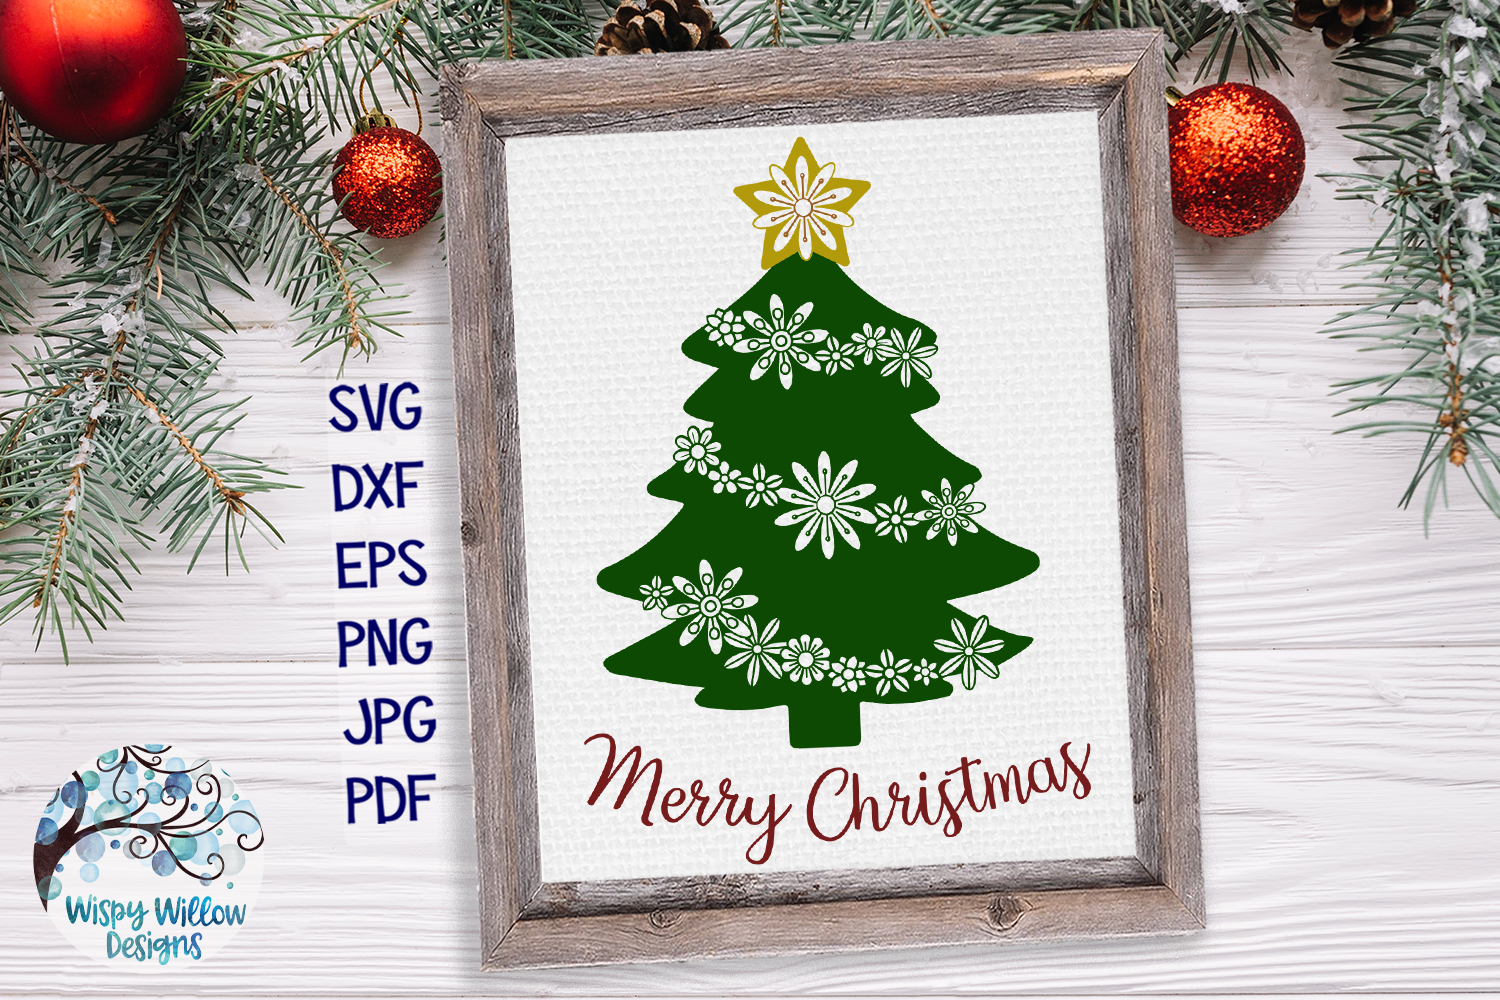 Merry Christmas SVG | Floral Ornament Christmas Tree SVG